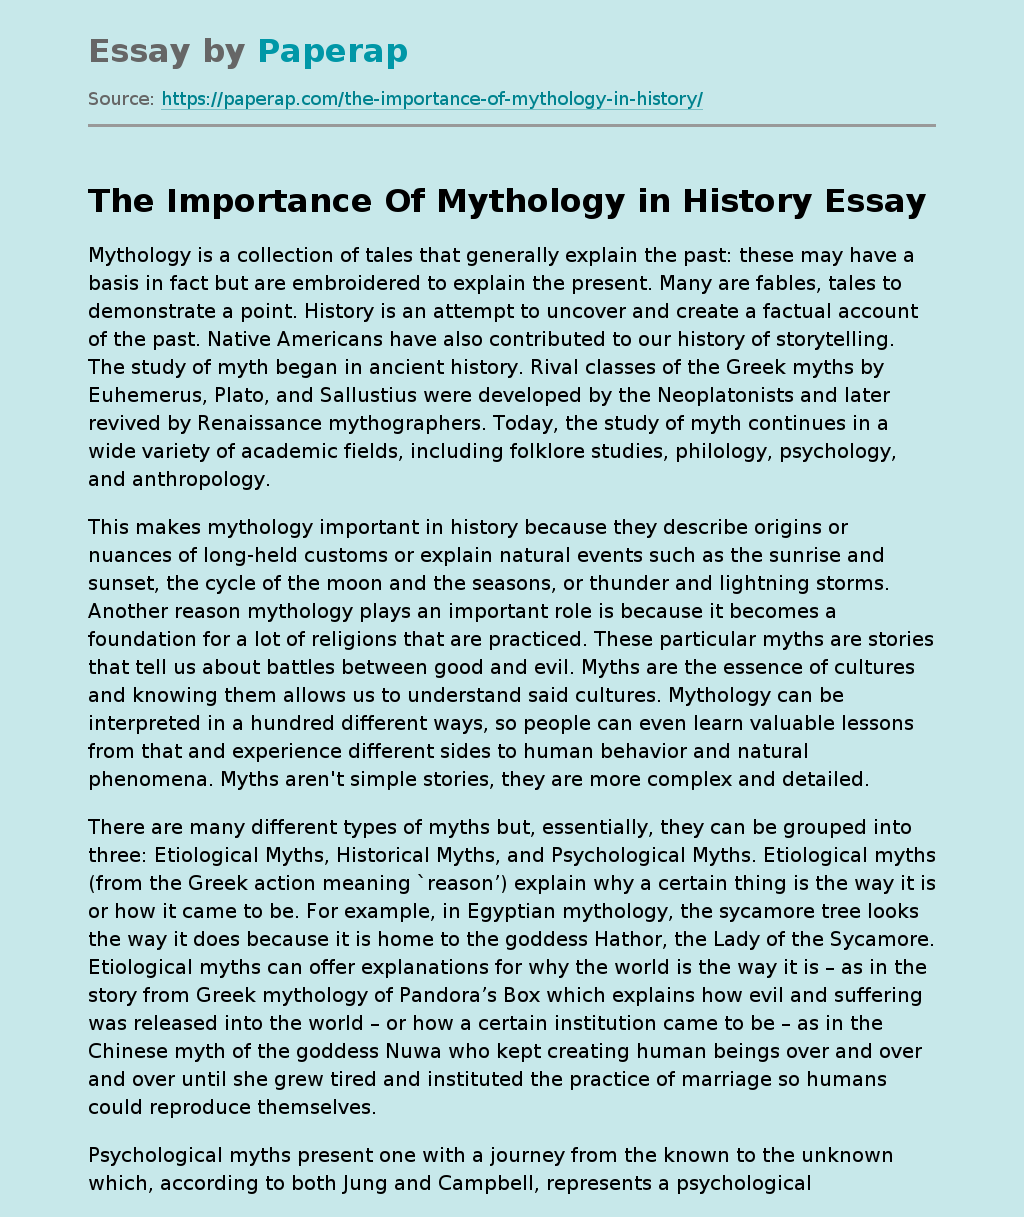 The Importance Of Mythology in History